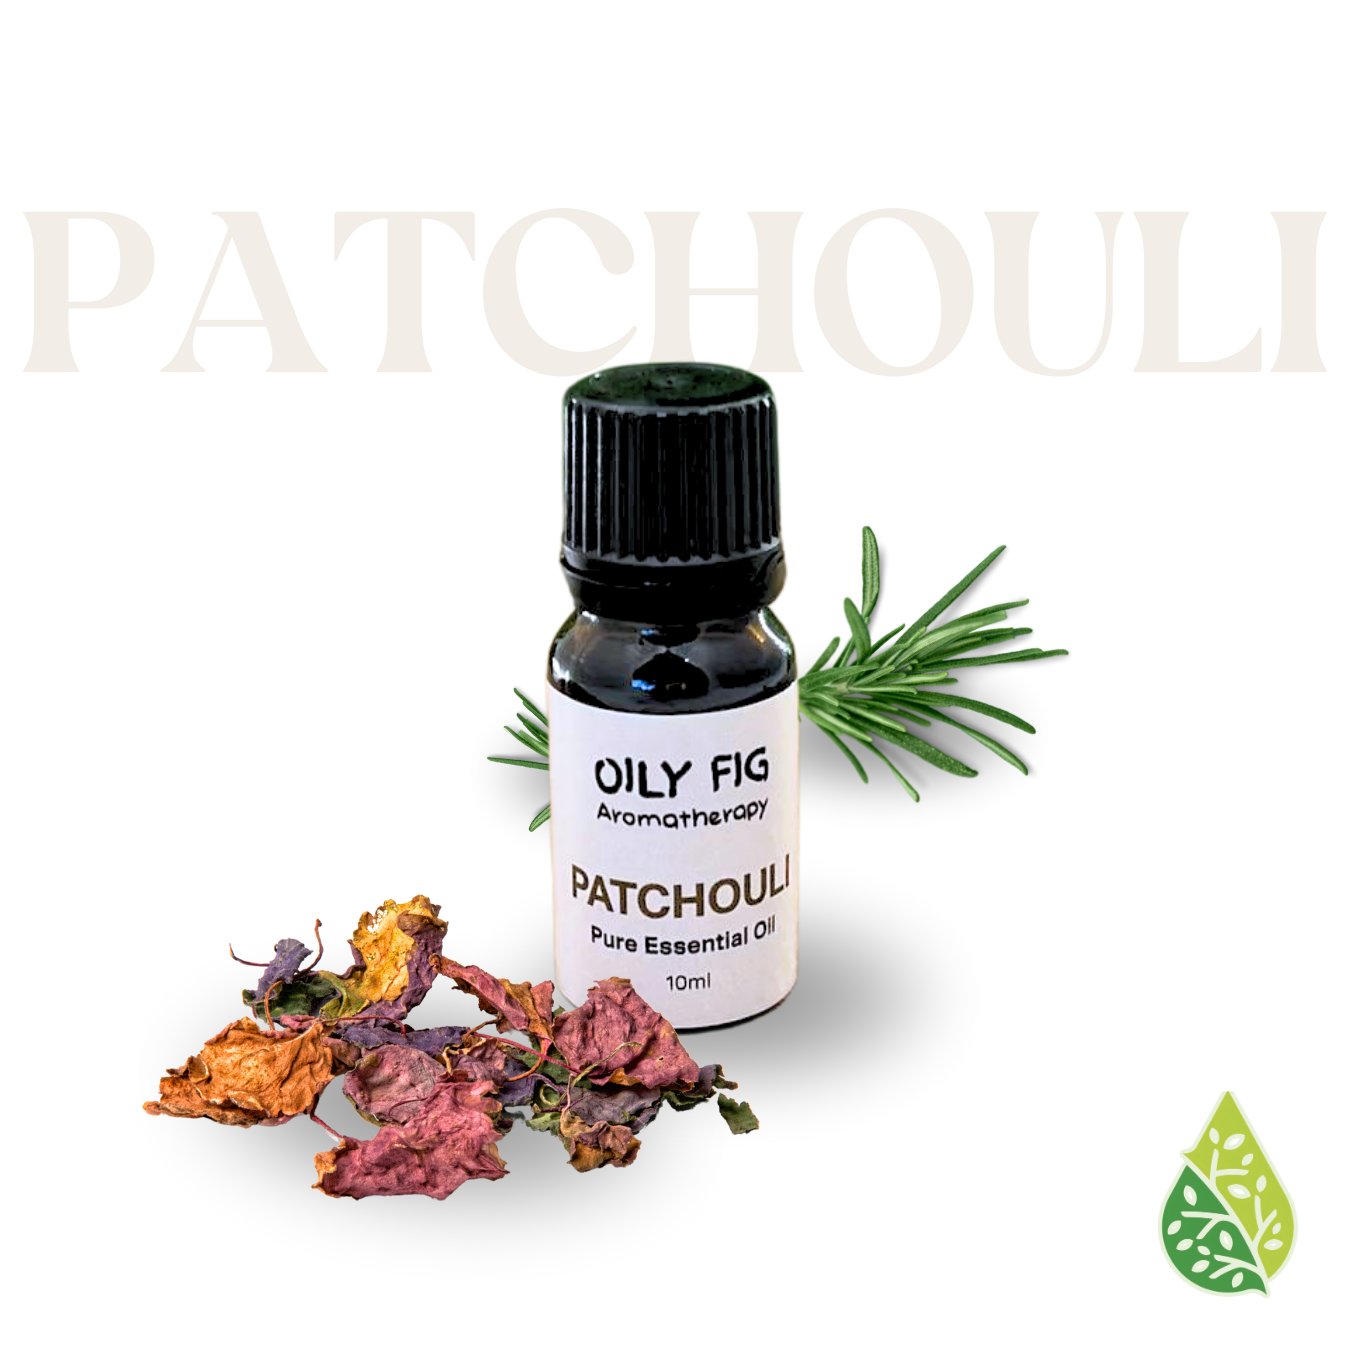 PURE Patchouli essential oil